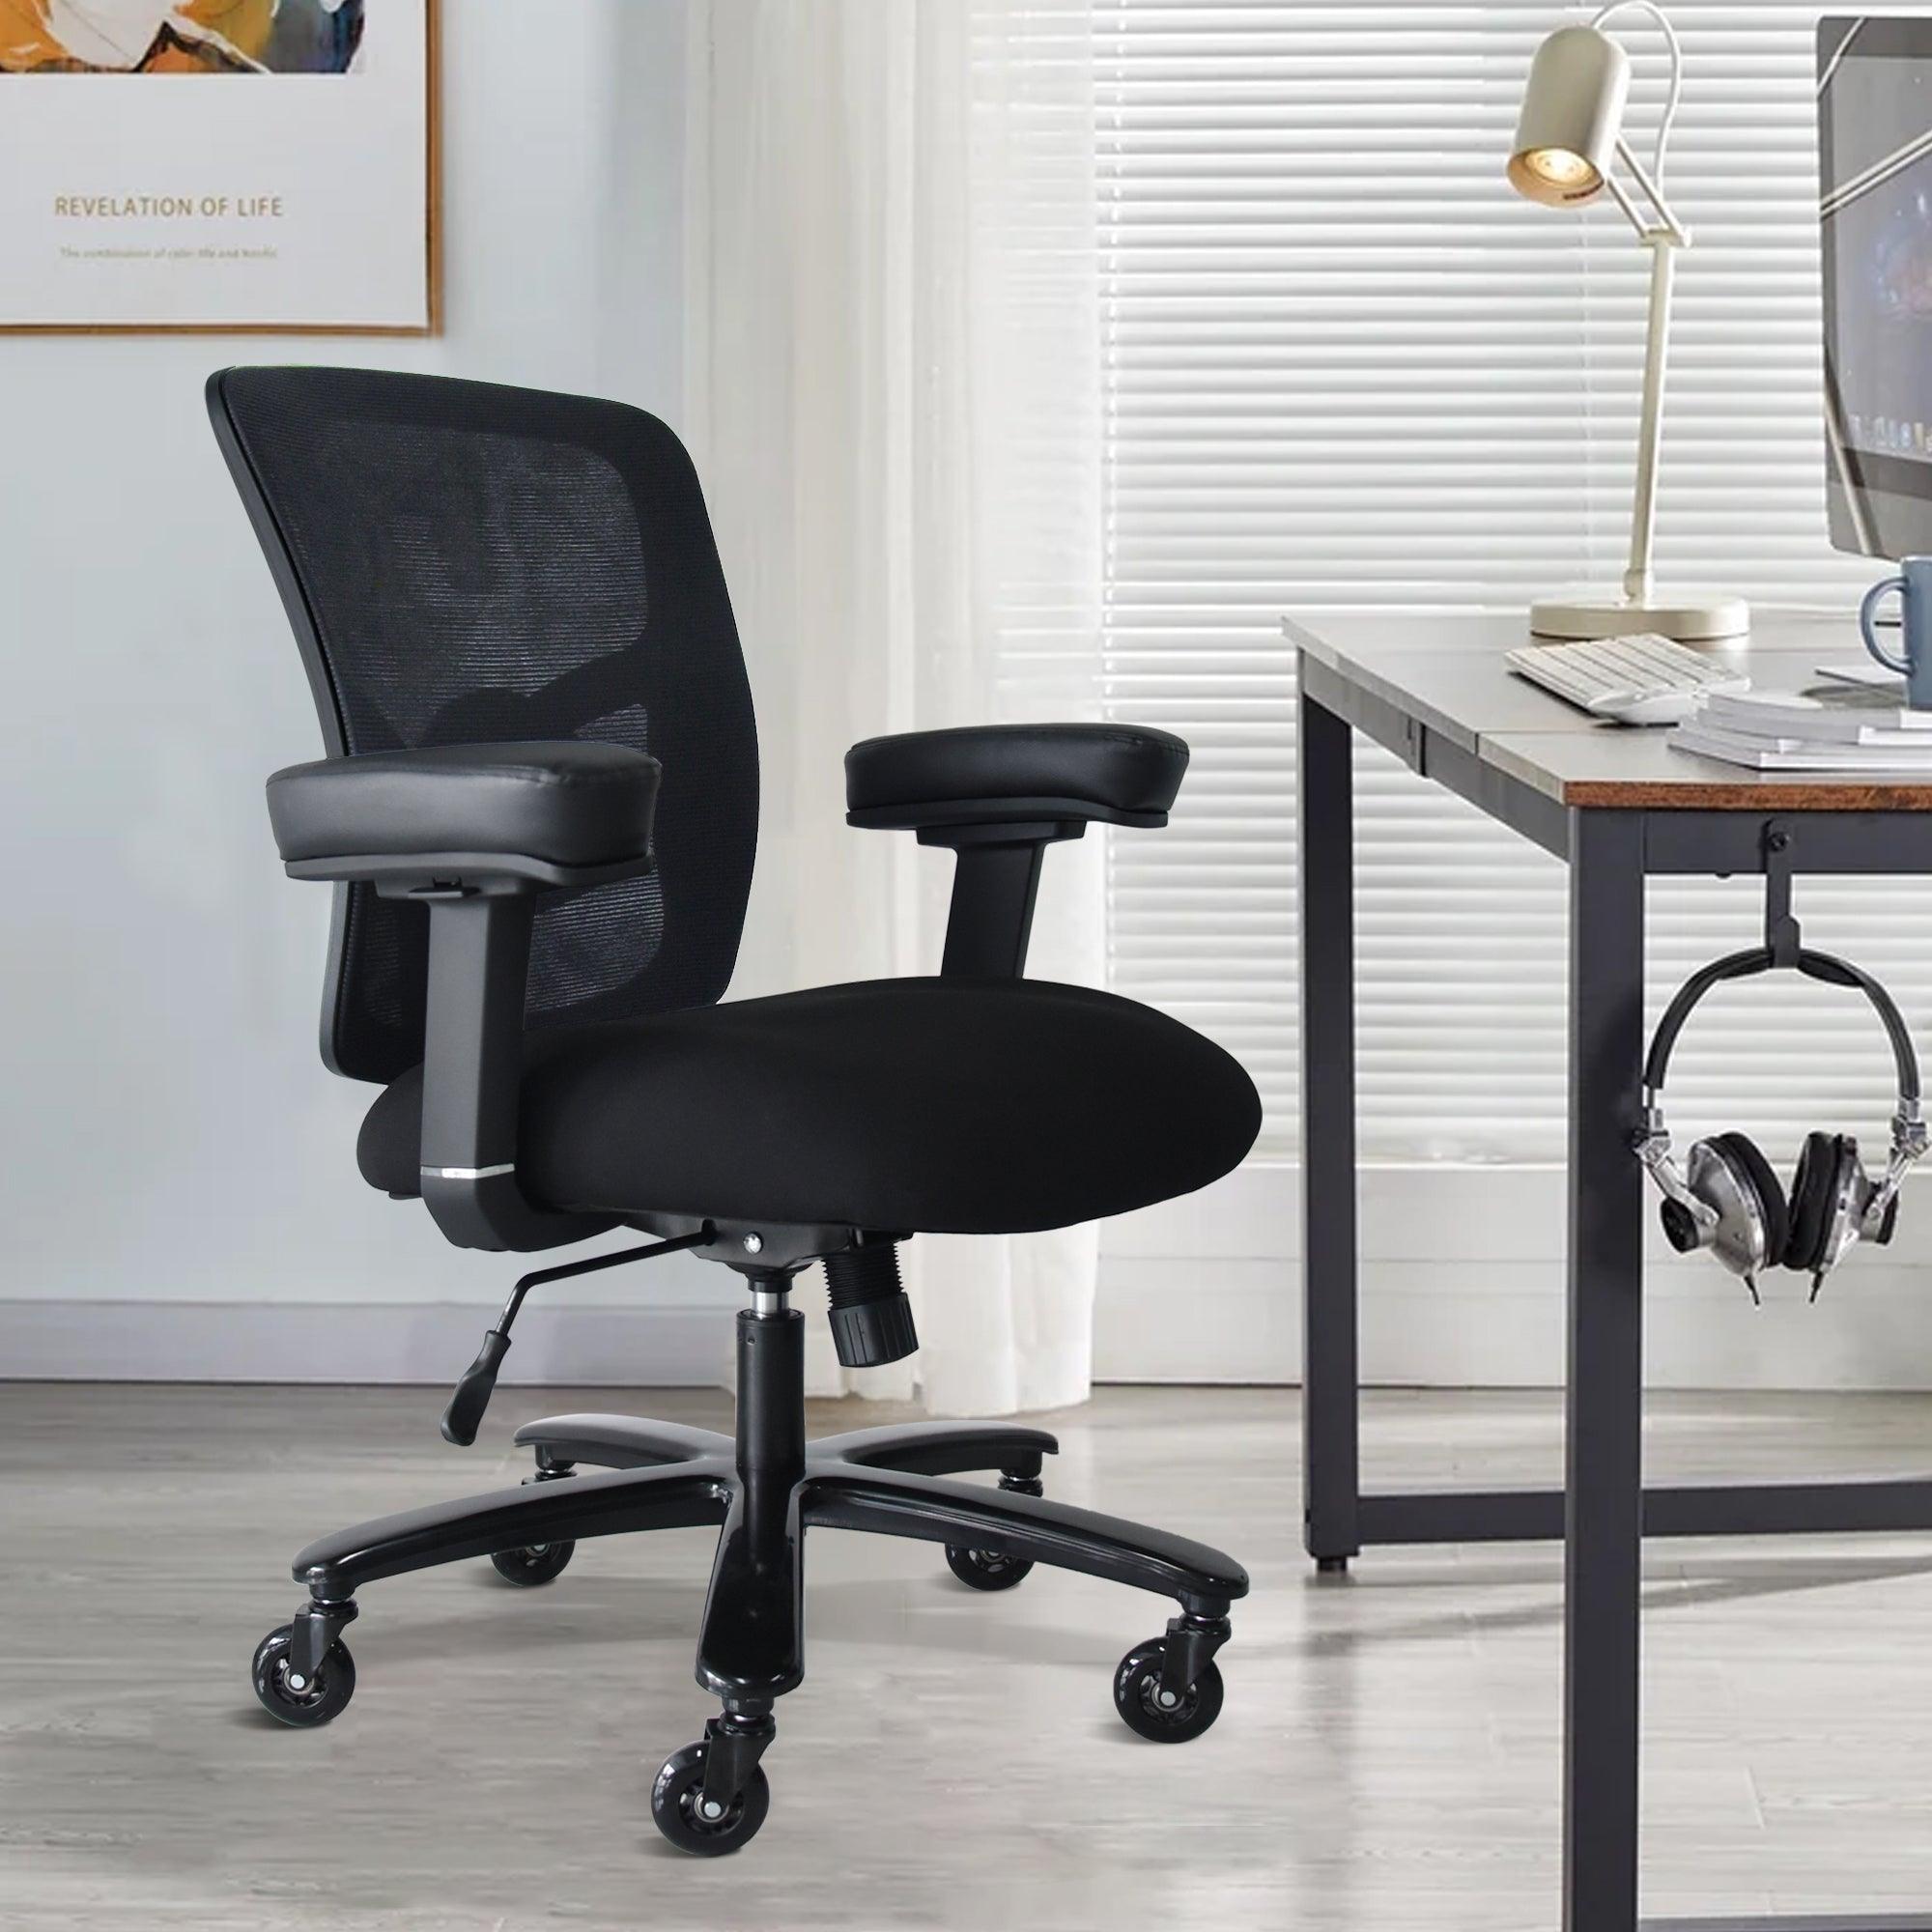 Ergonomic Office Chair Pro 5127 - Honsit Chair